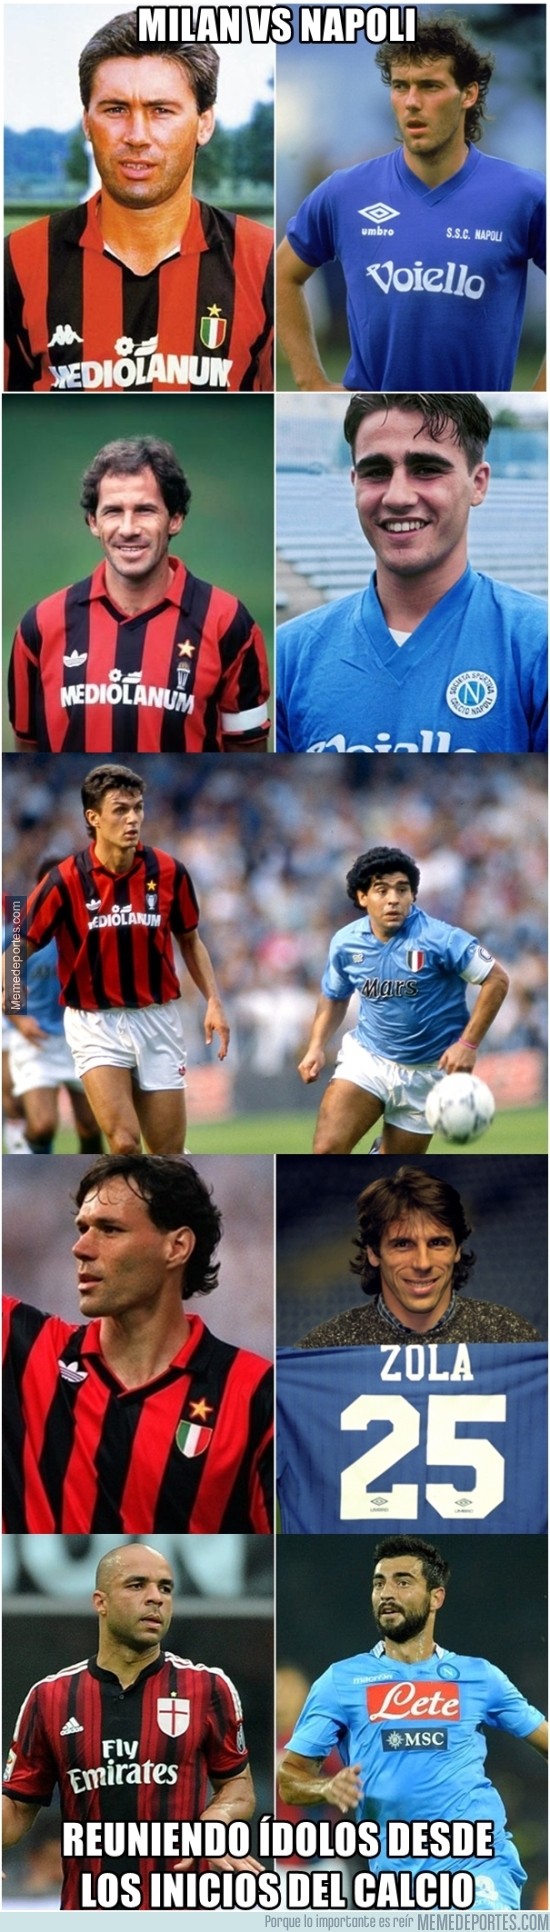 807859 - Milan vs Napoli. un duelo de historia que hoy nos trae un Bacca vs Higuaín